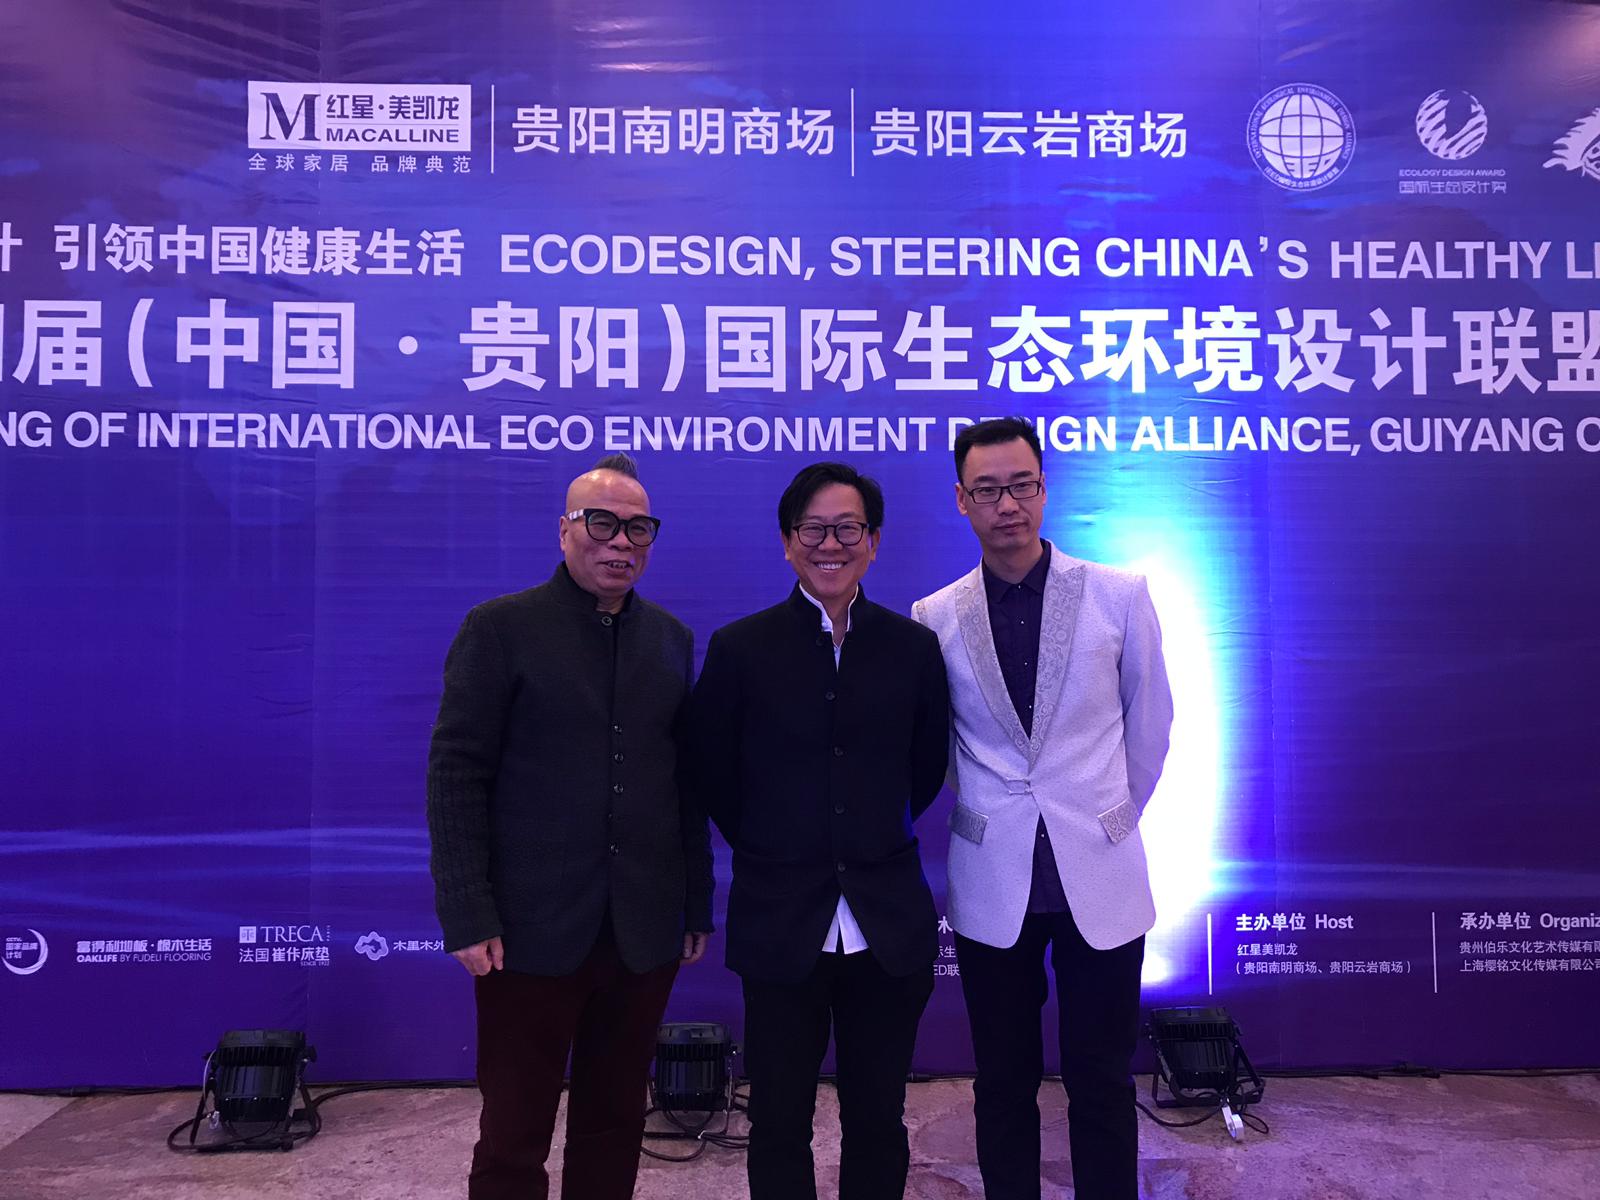 Annual Meeting of International ECO Environment Design Alliance, Guiyang China 2018